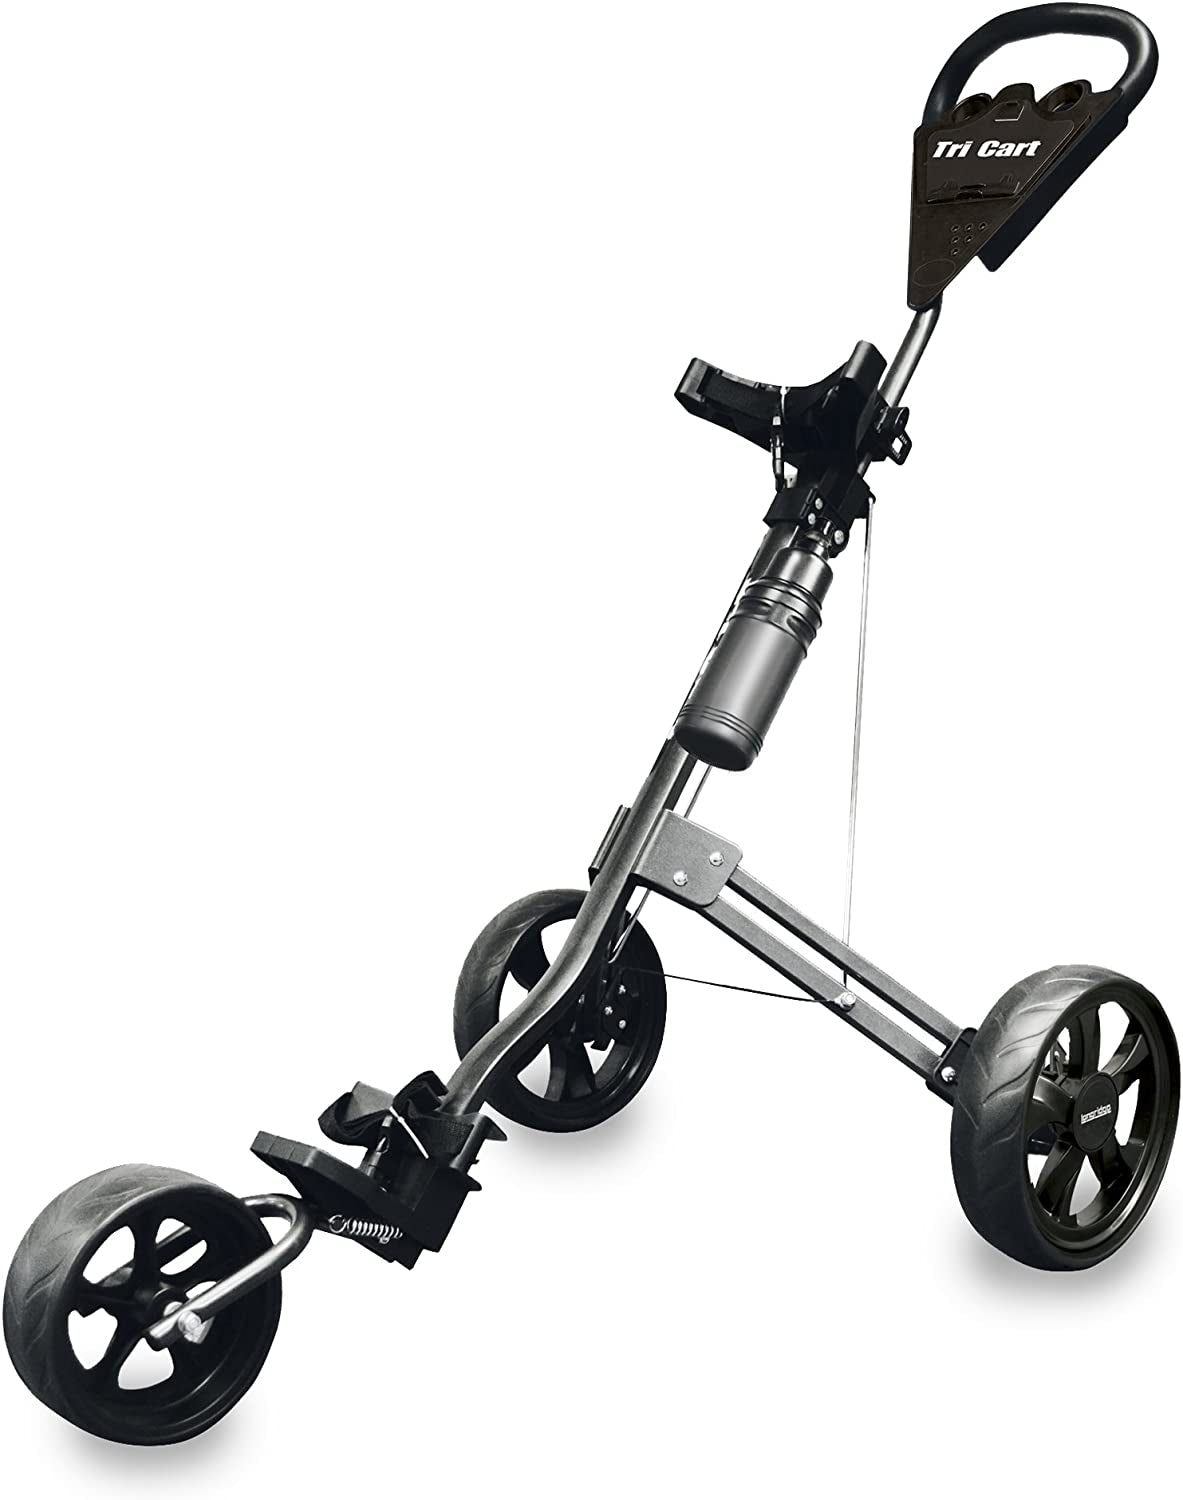 2019 Golf Tri Cart 3 Wheel Mens Push/Pull Golf Trolley + Free Water Bottle